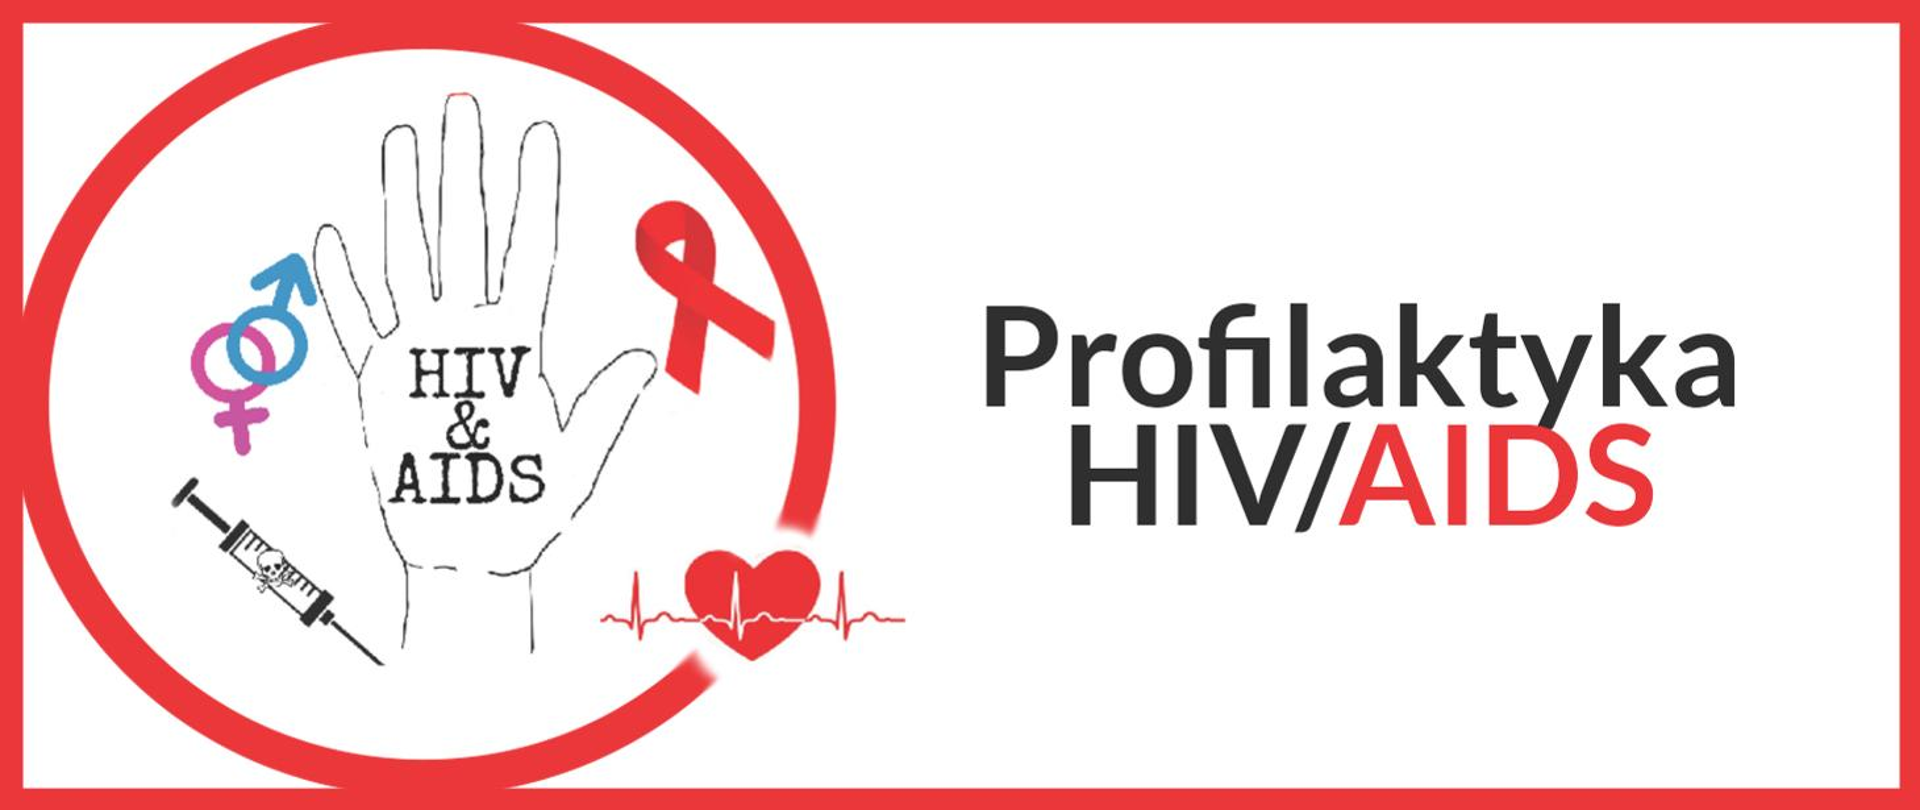 profilaktyka hiv aids